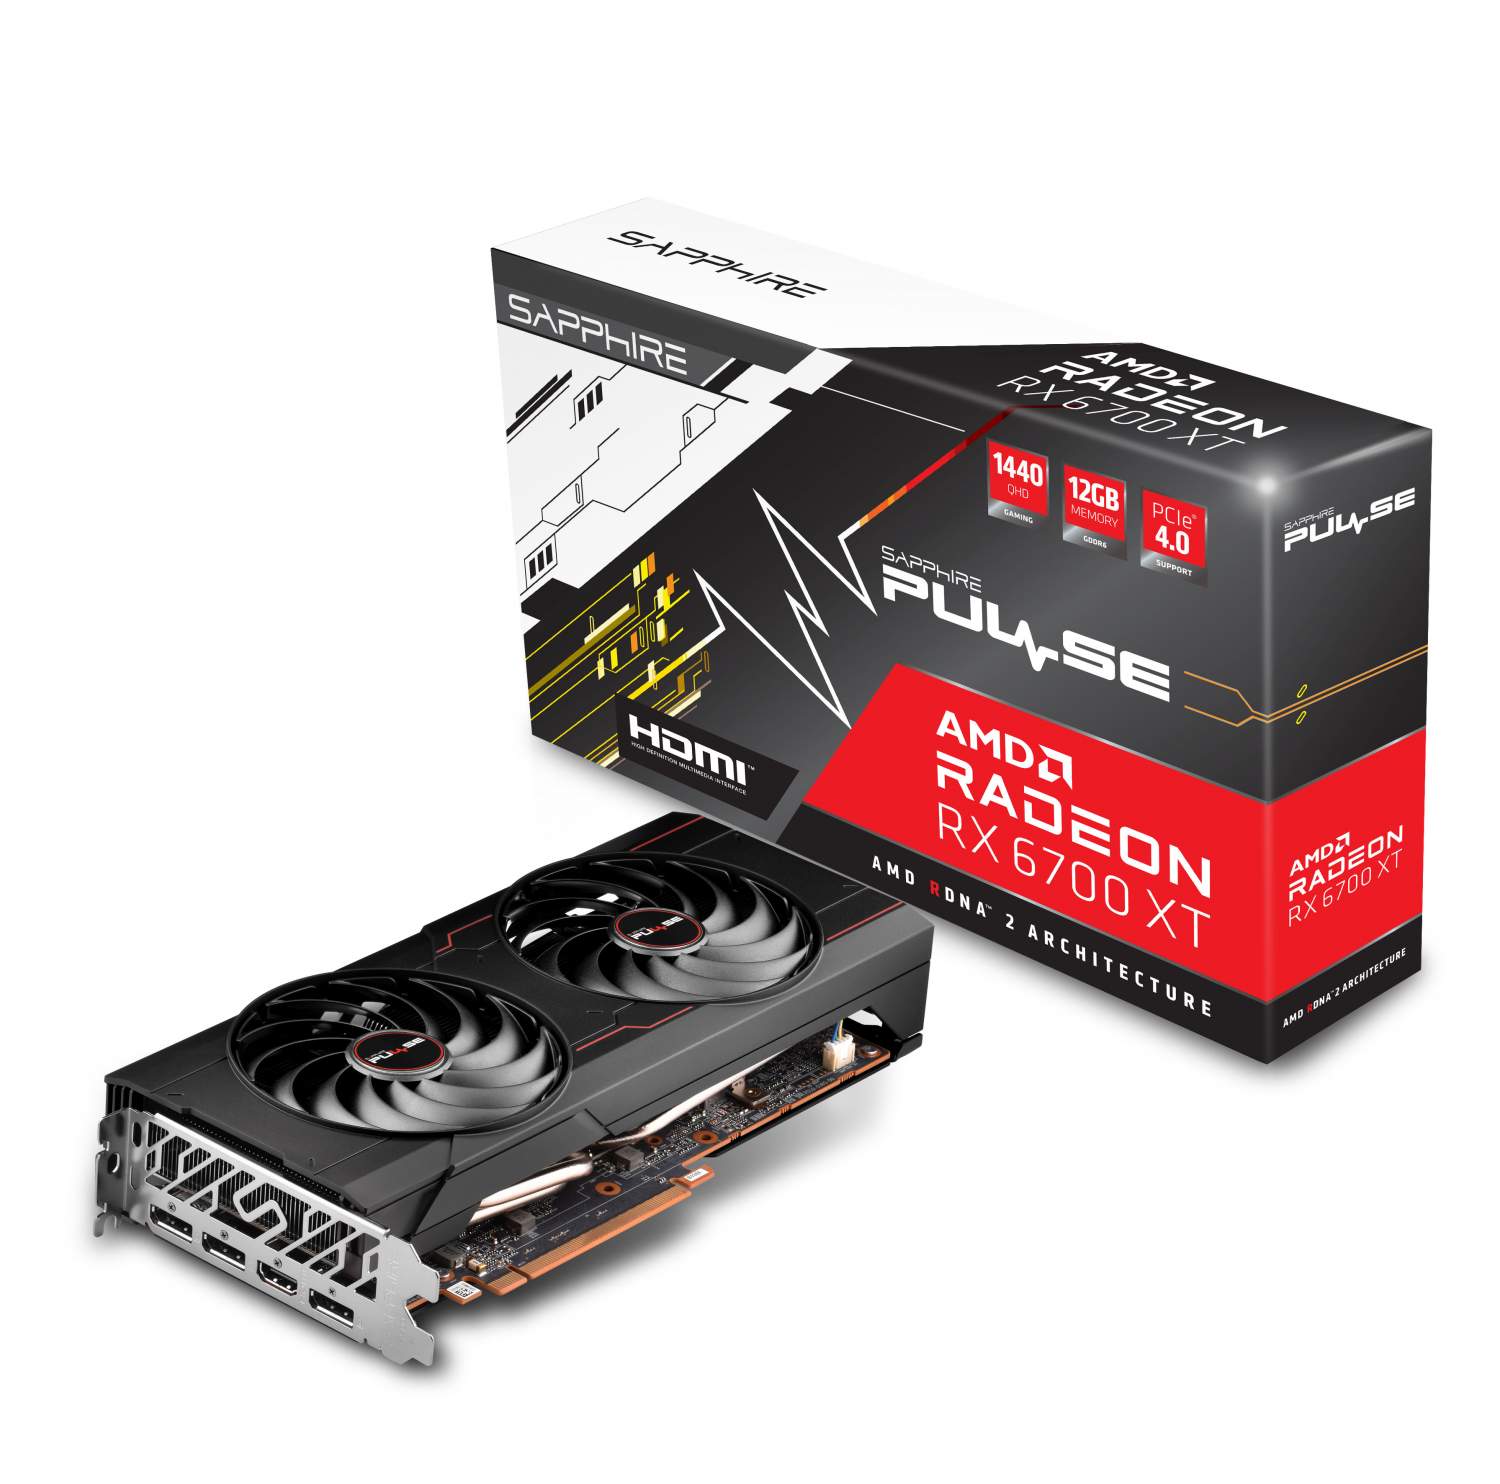 AMD Radeon RX 6700 xt SAPPHIRE